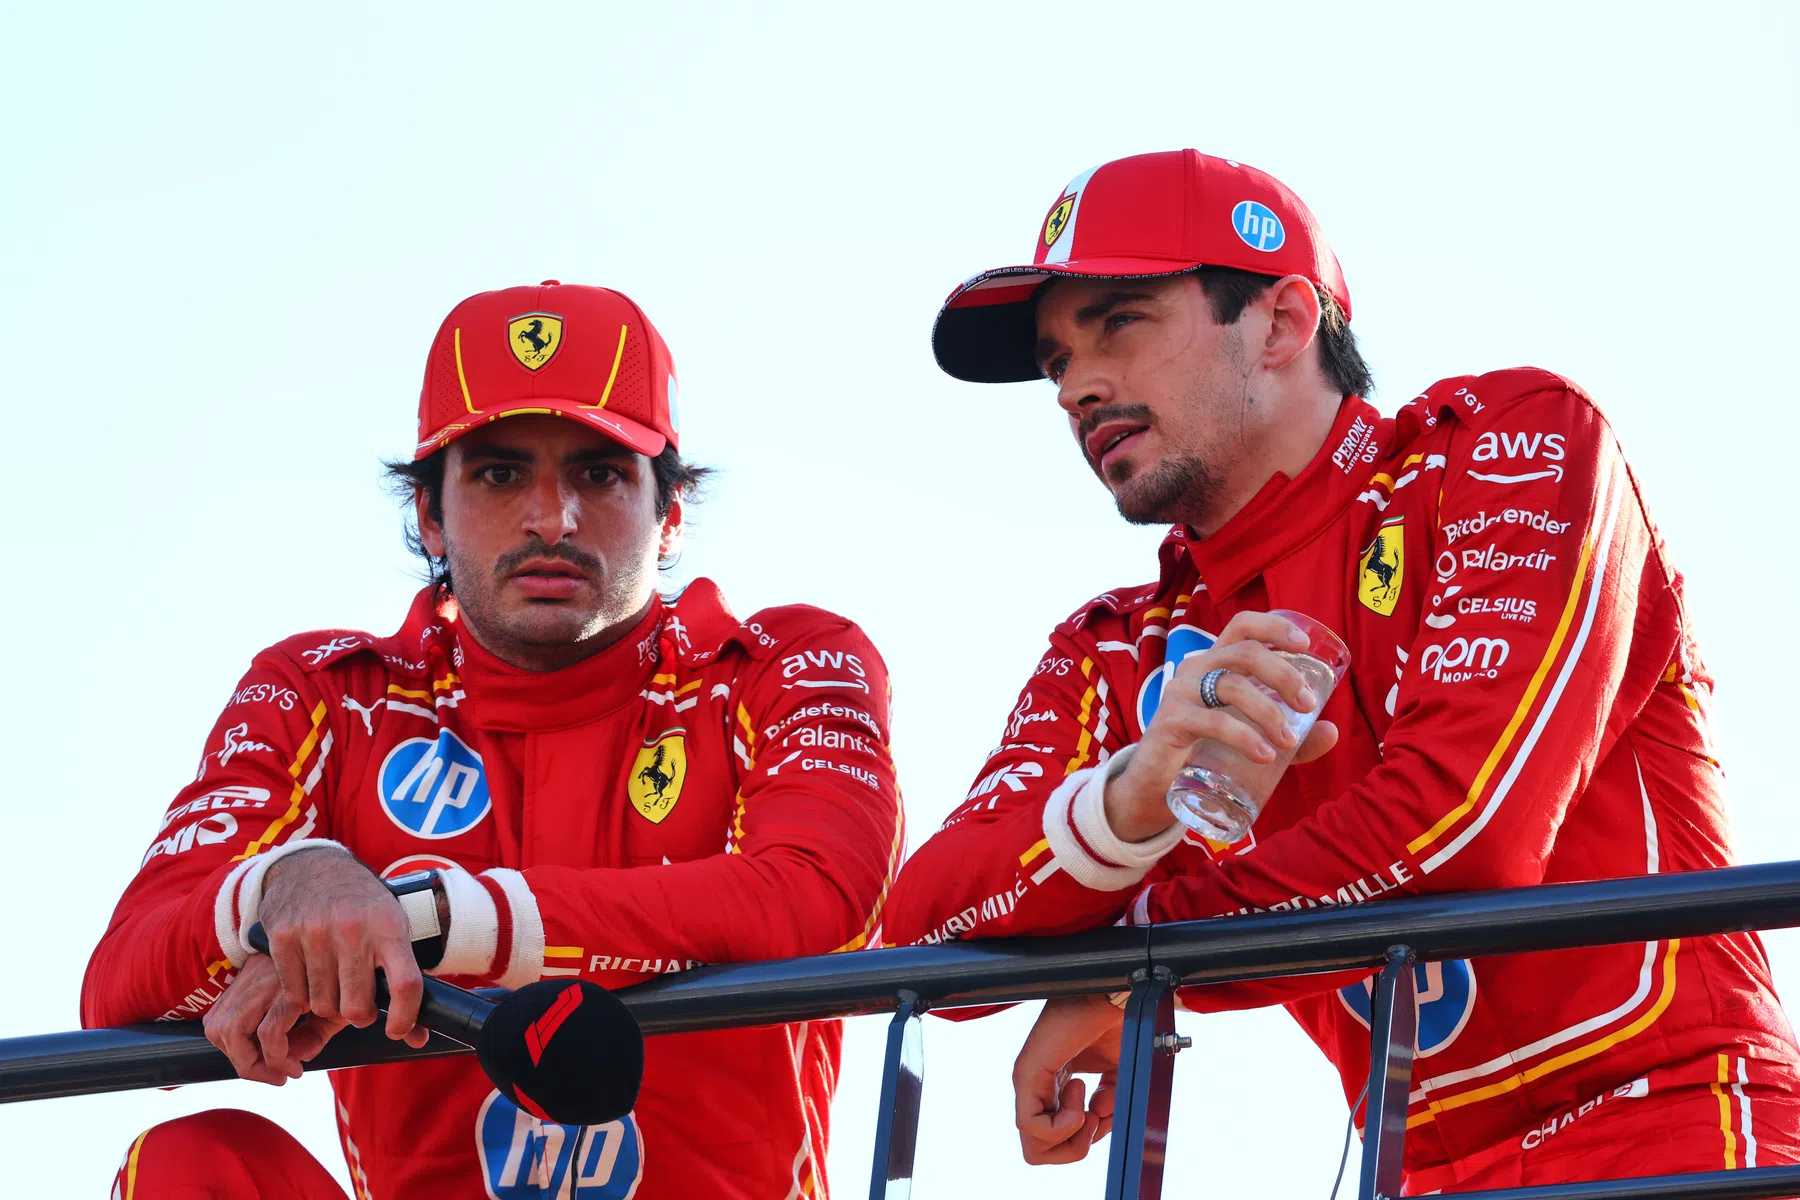 Sainz intends to help Leclerc win his home race in Monaco